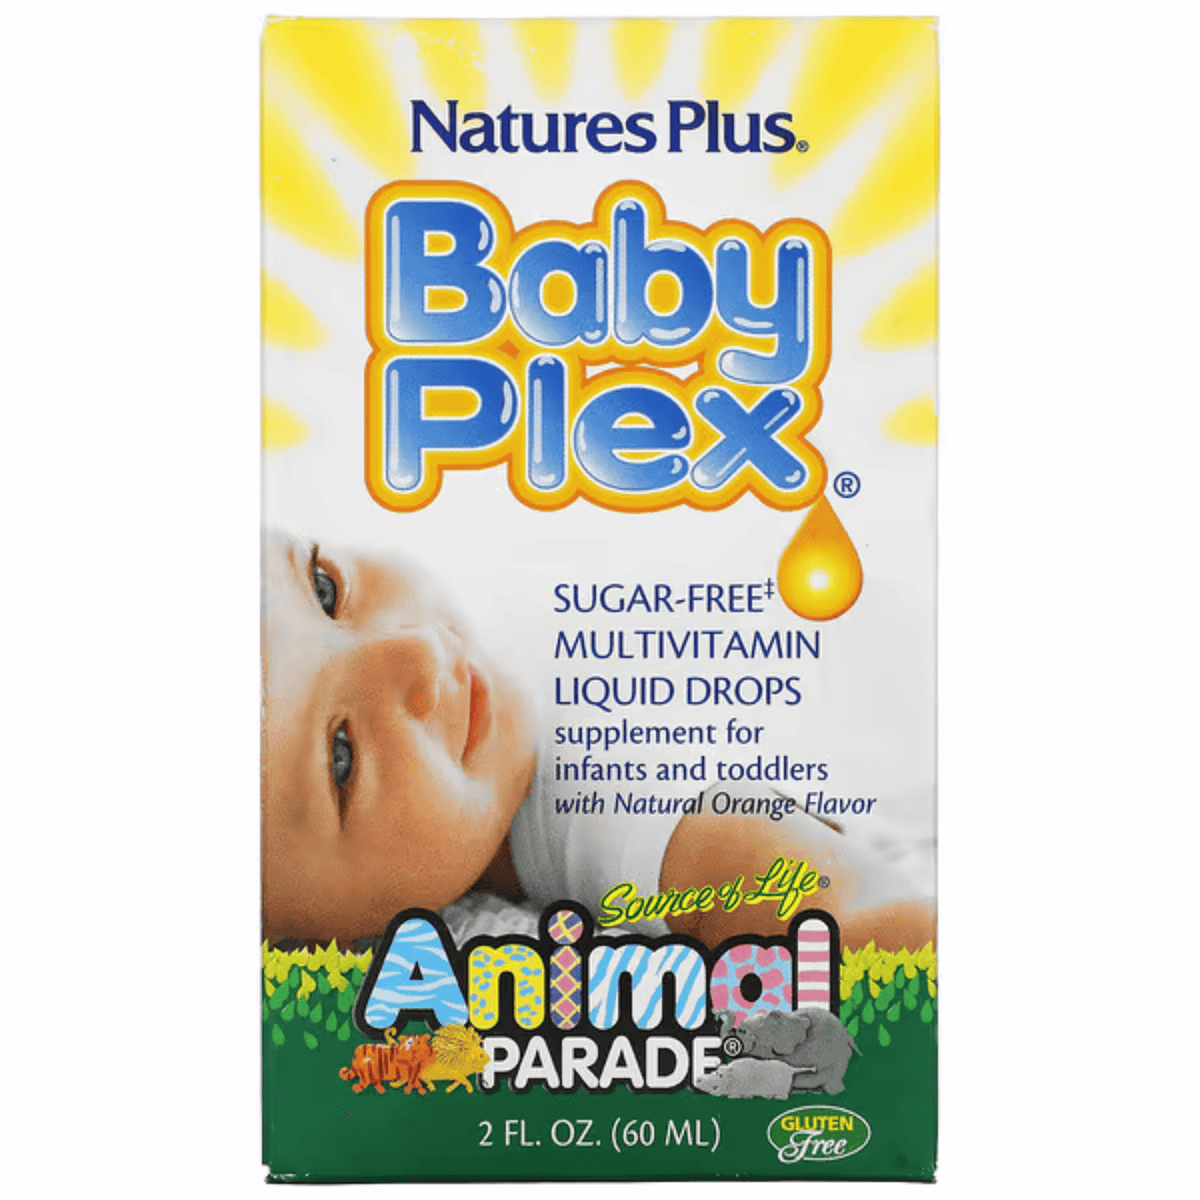 Primary Image of Baby Plex Drops